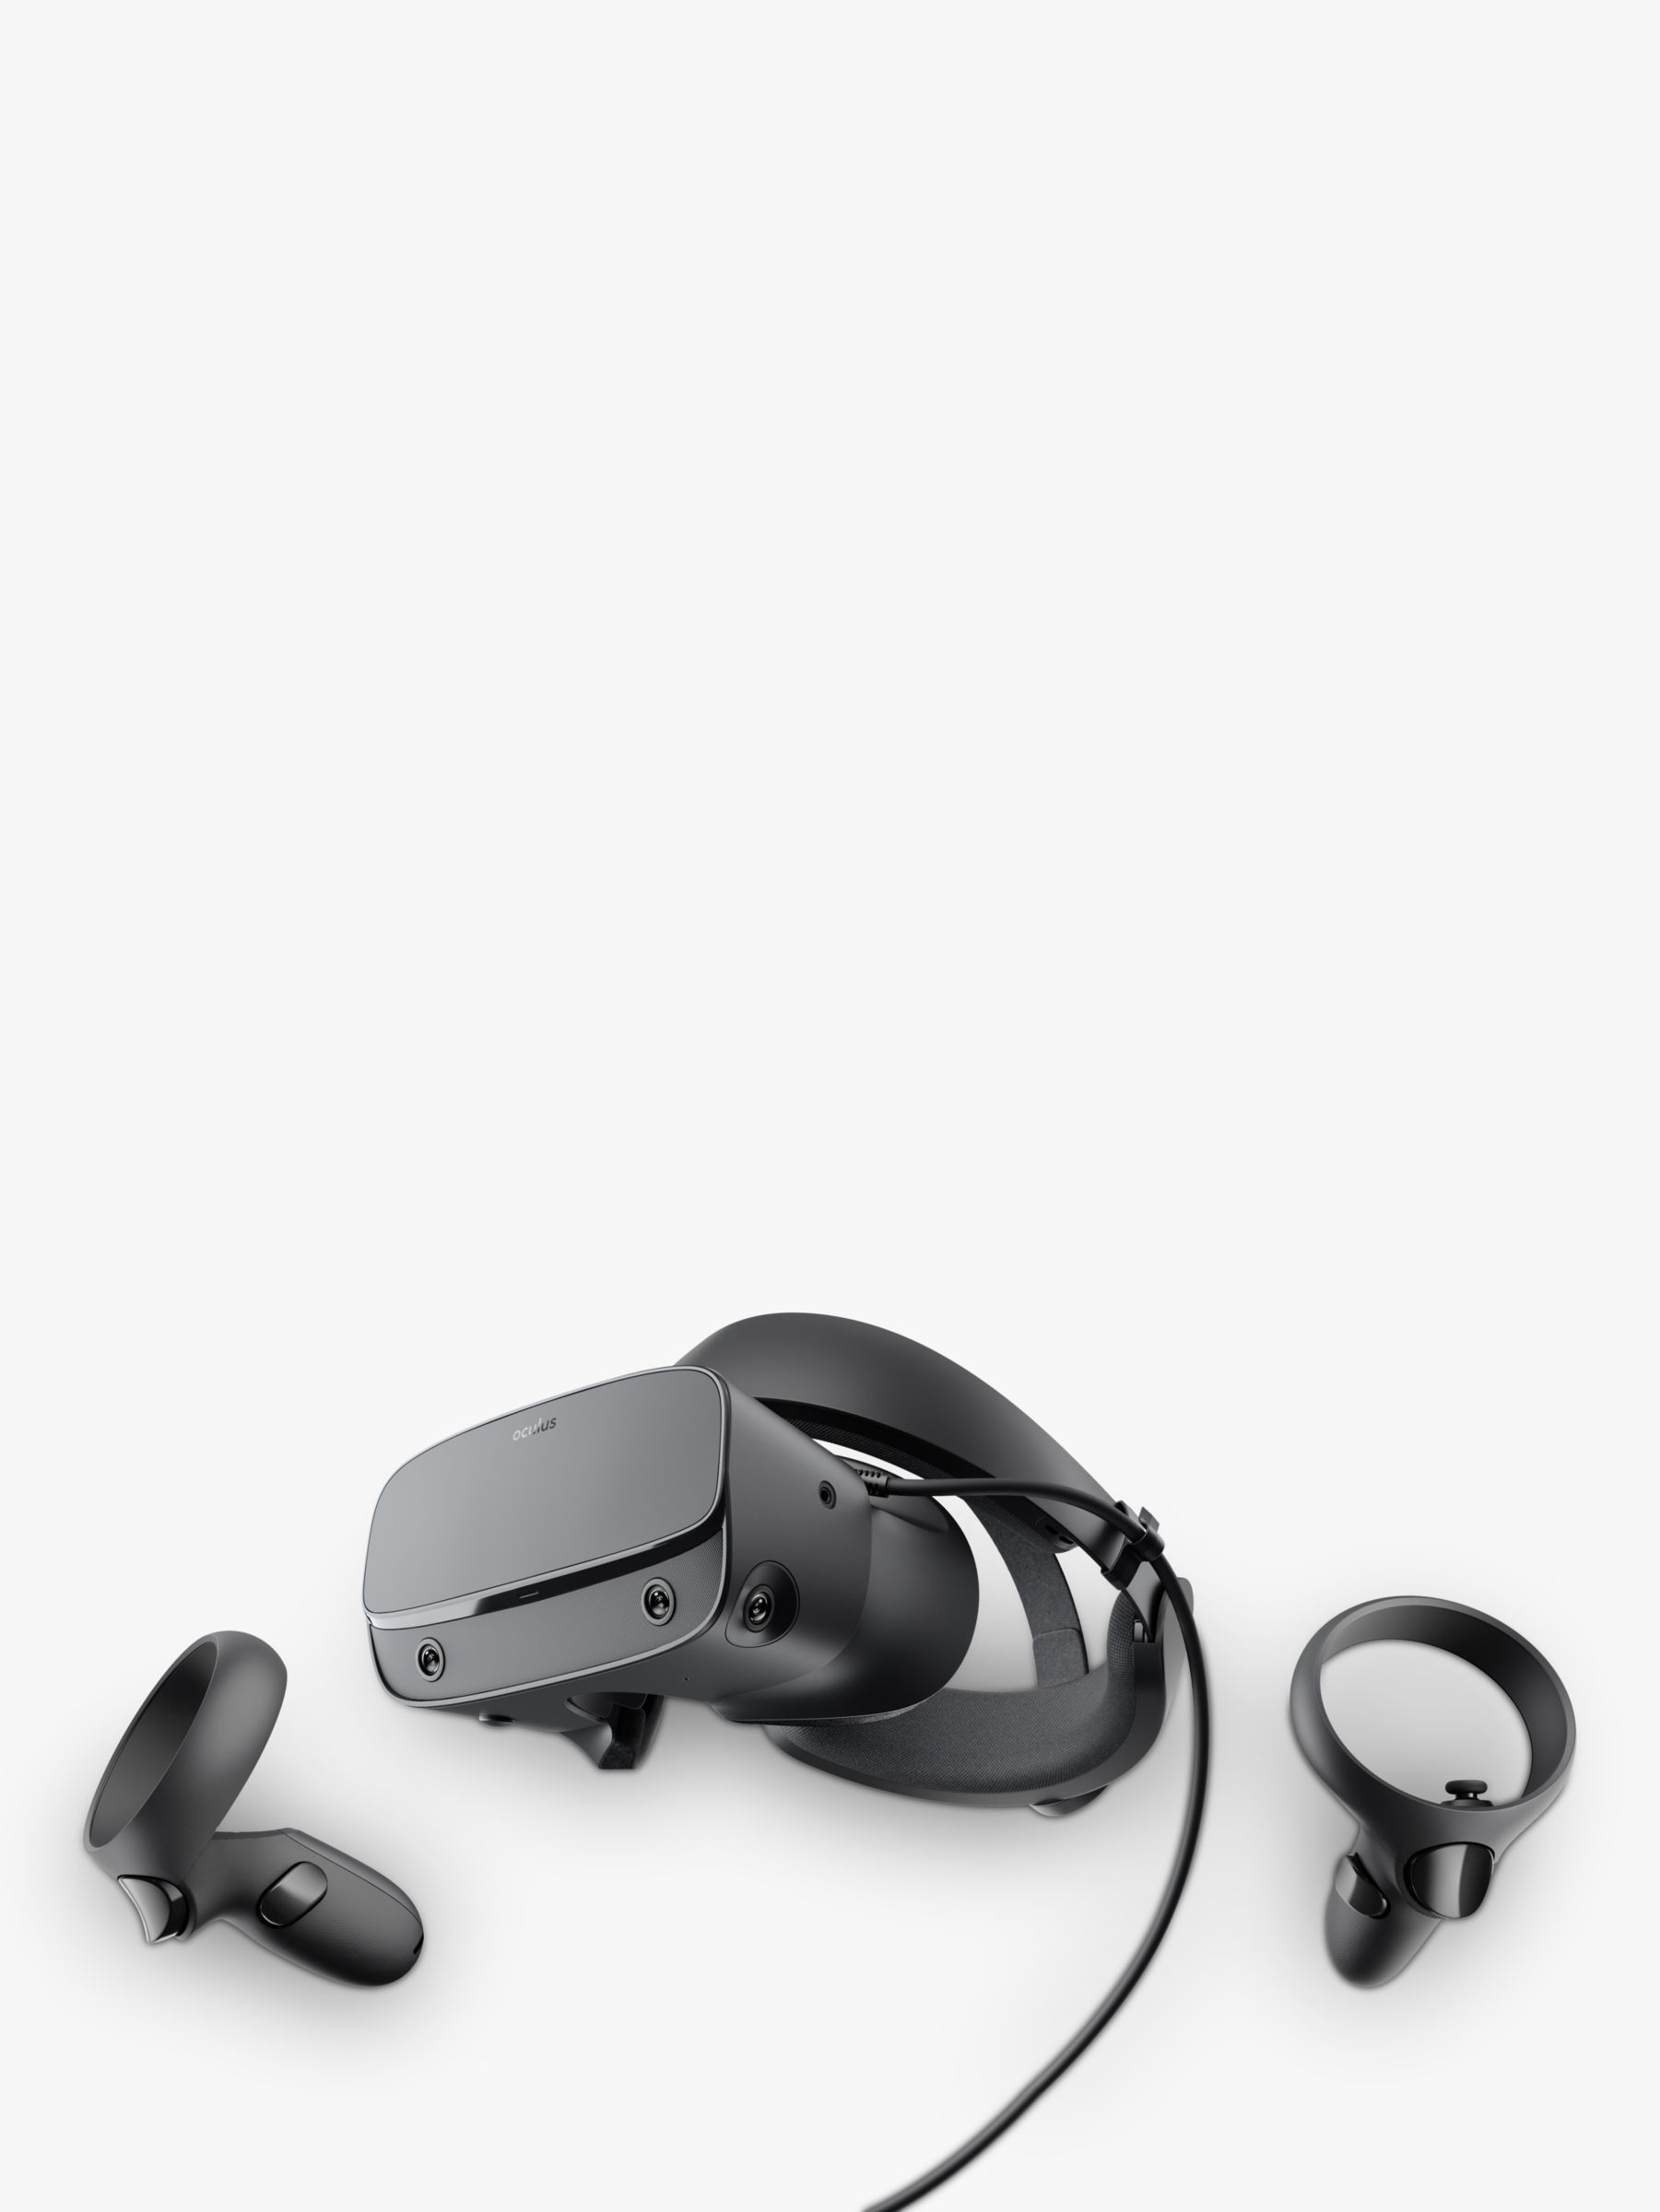 oculus rift s headset